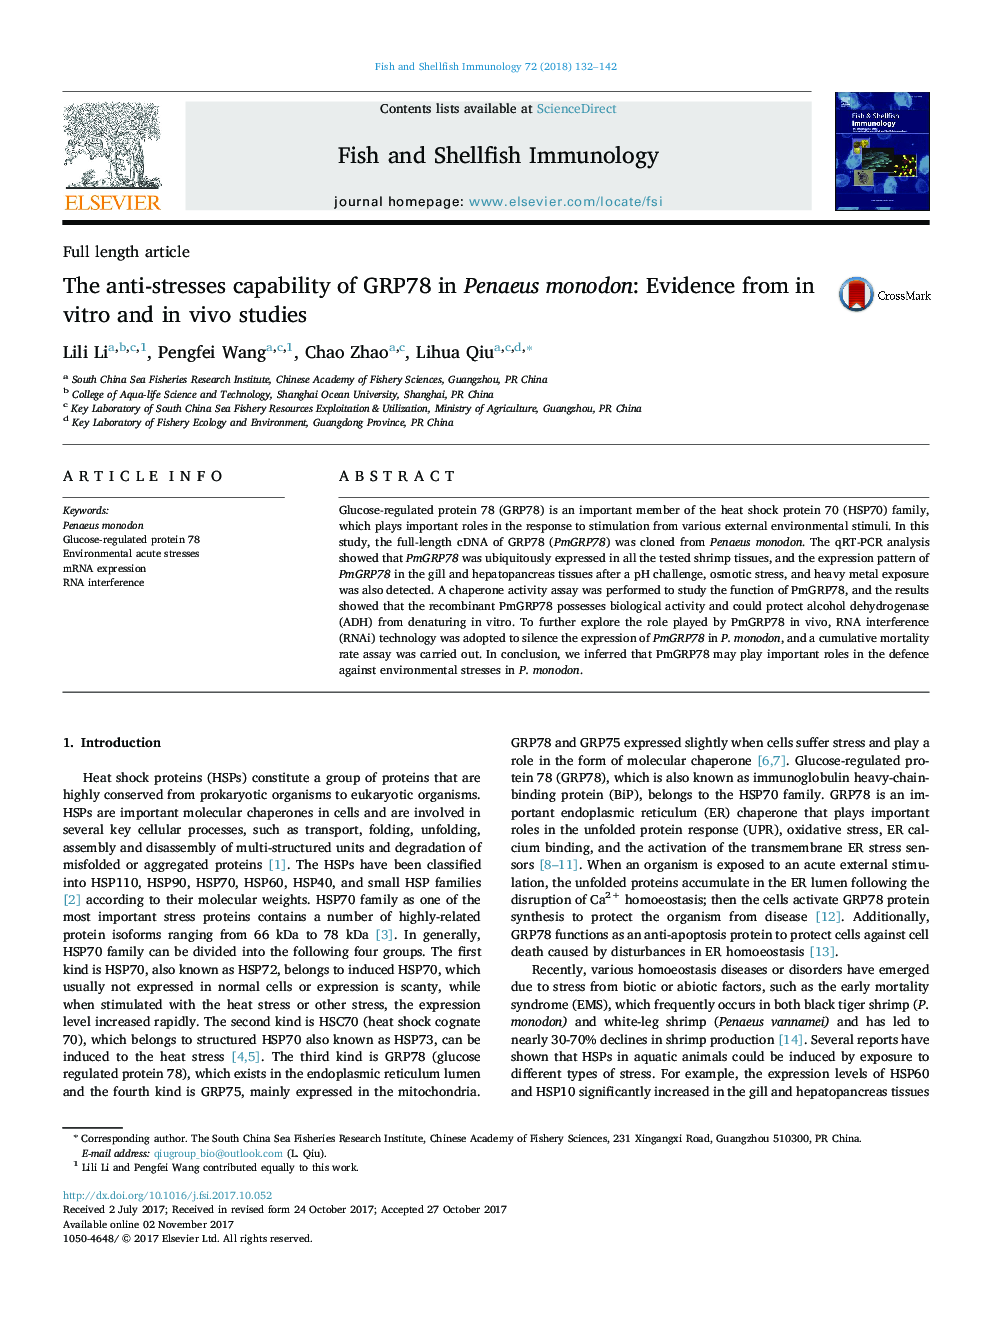 The anti-stresses capability of GRP78 in Penaeus monodon: Evidence from in vitro and in vivo studies